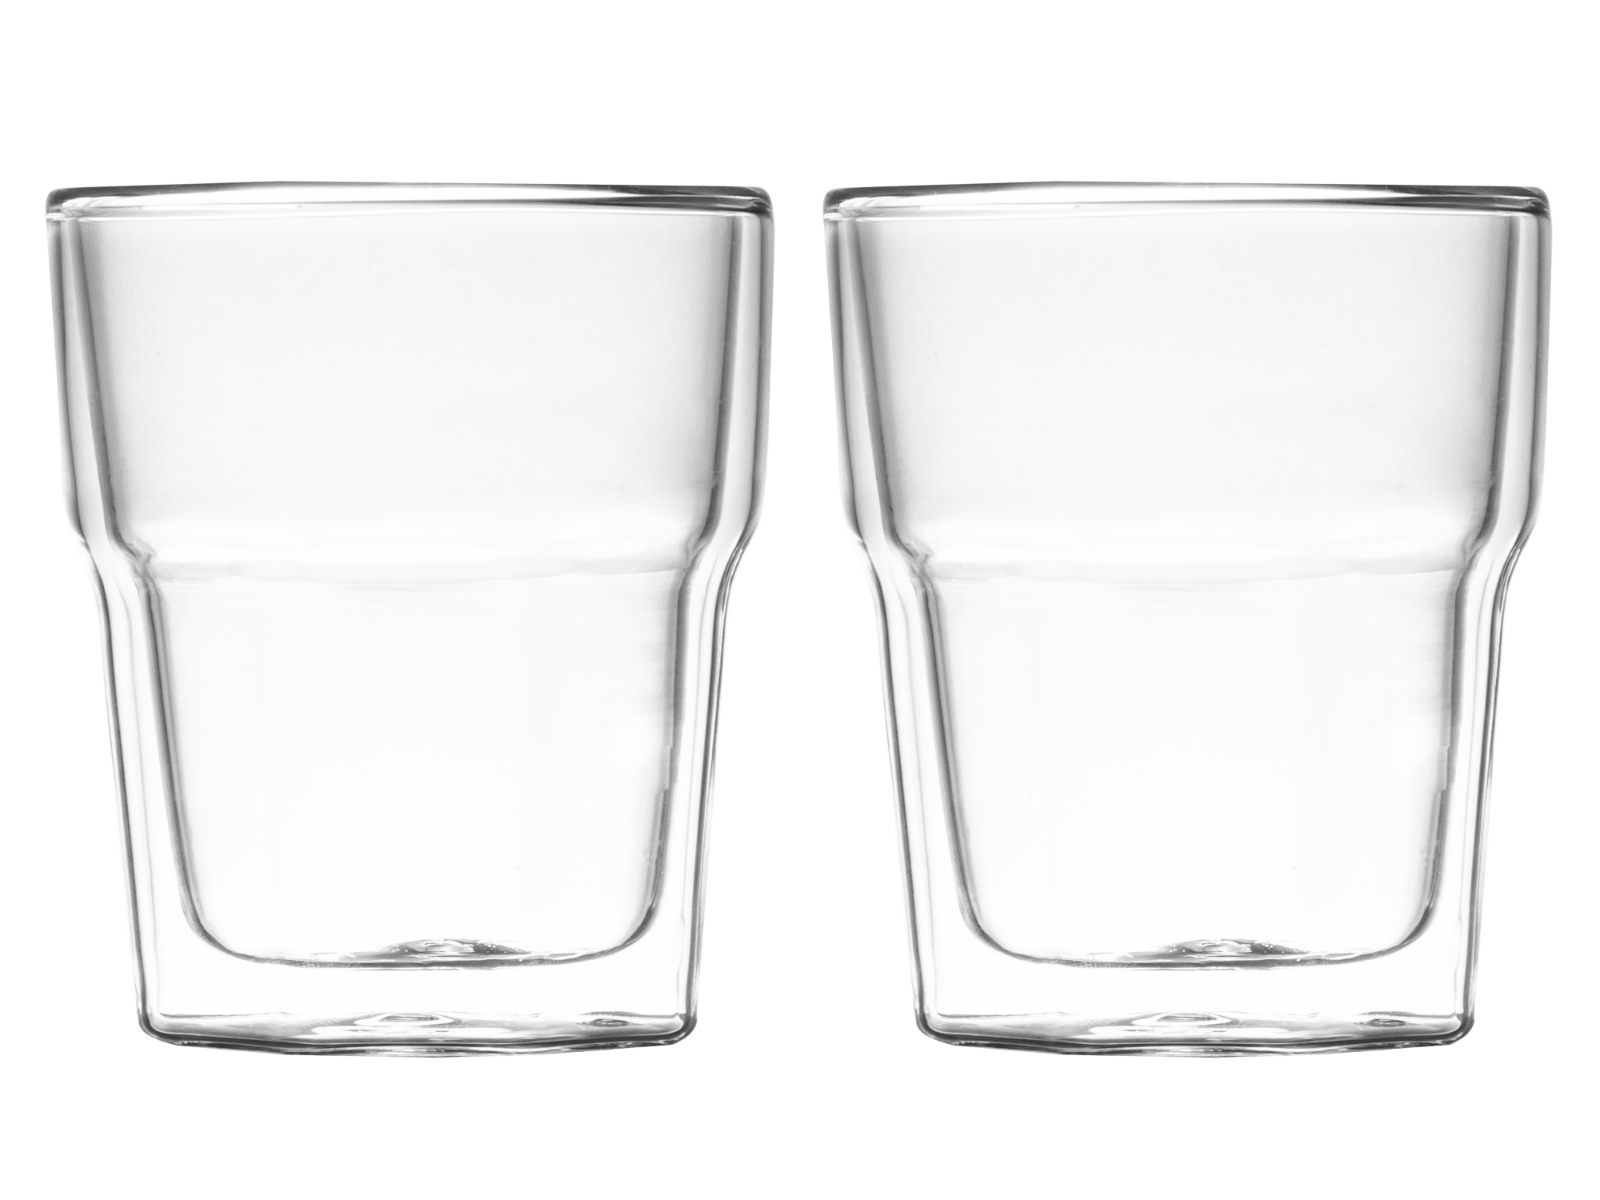 Glas Dubbelwandig 100ml - set 2 stuks - Chantilly